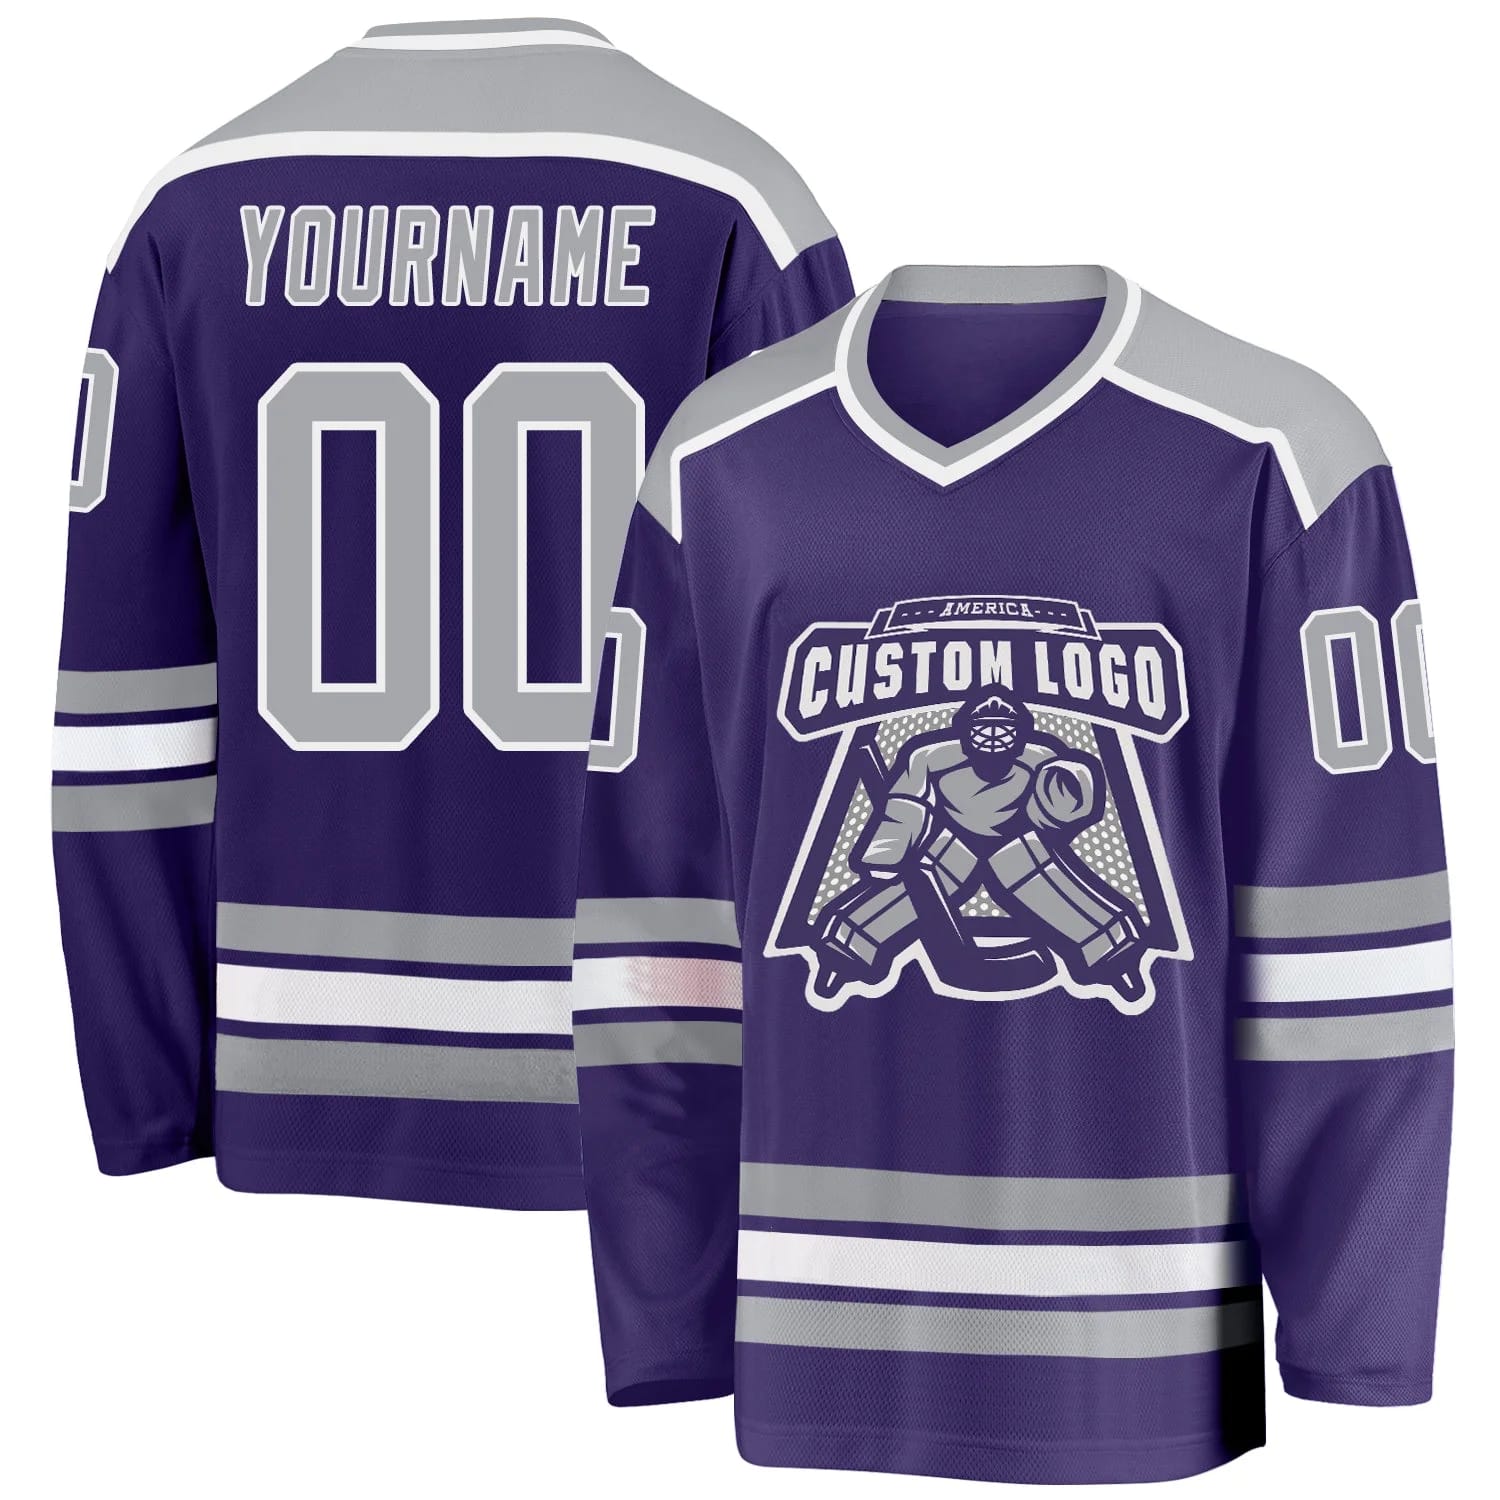 Stitched And Print Purple Gray-white Hockey Jersey Custom